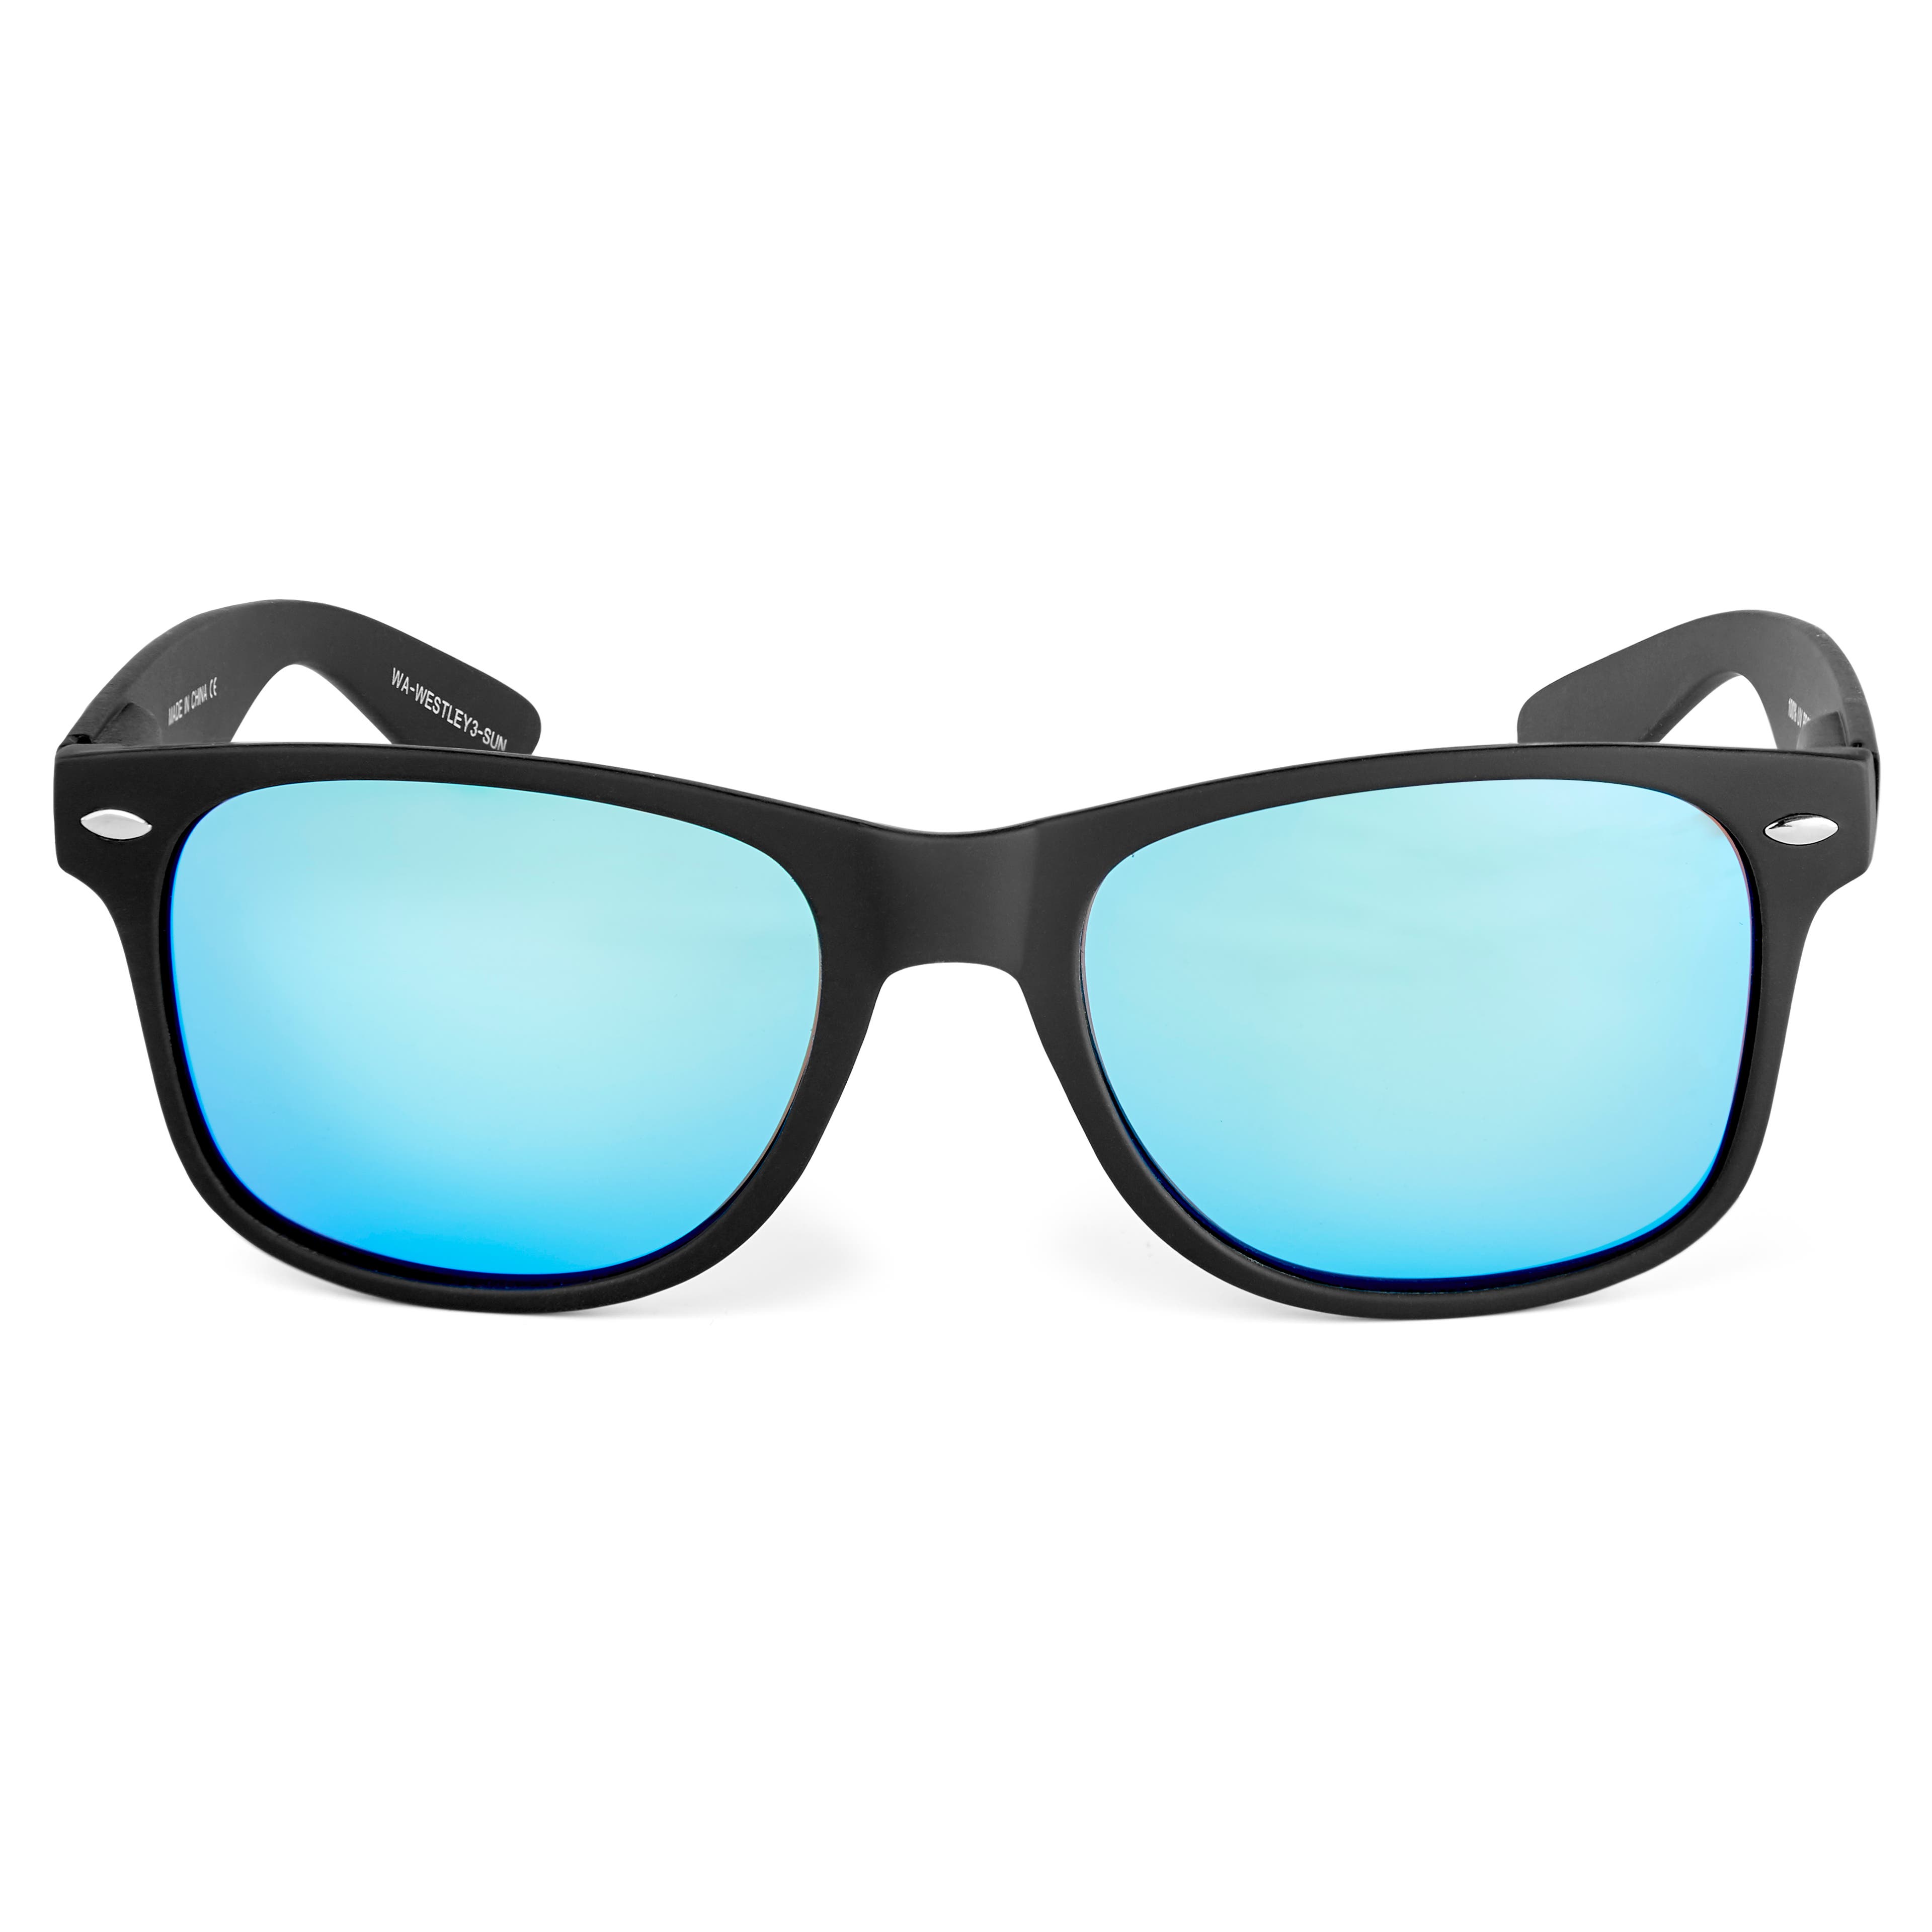 Polarised sunglasses  85 Styles for men in stock